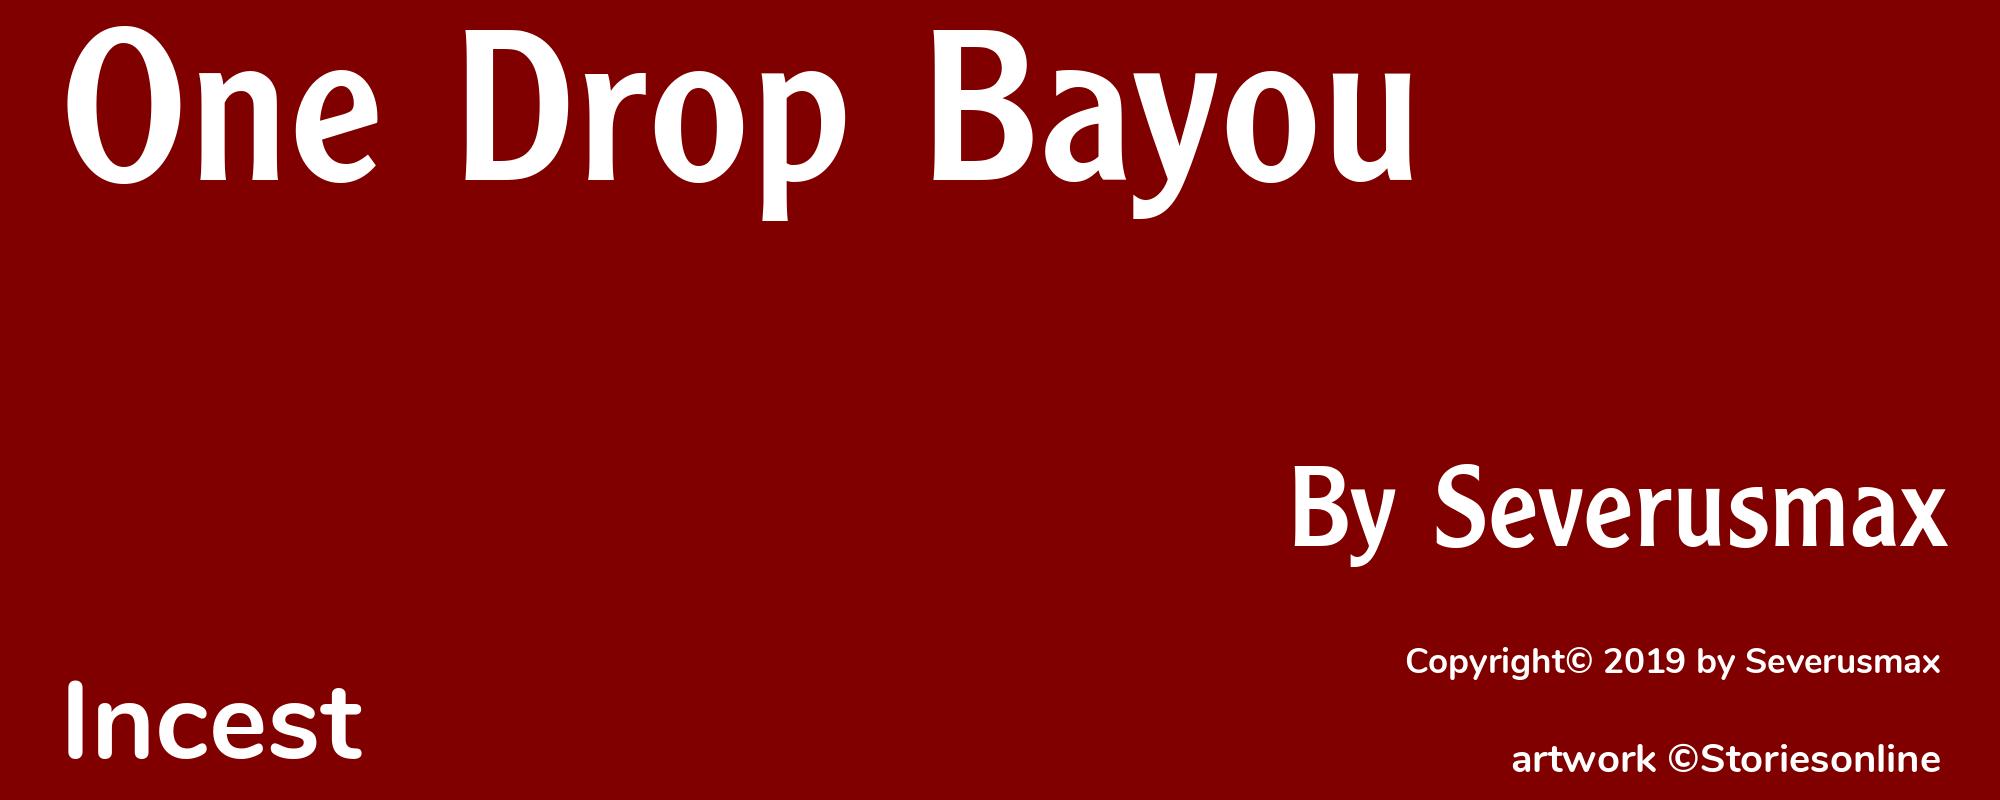 One Drop Bayou - Cover